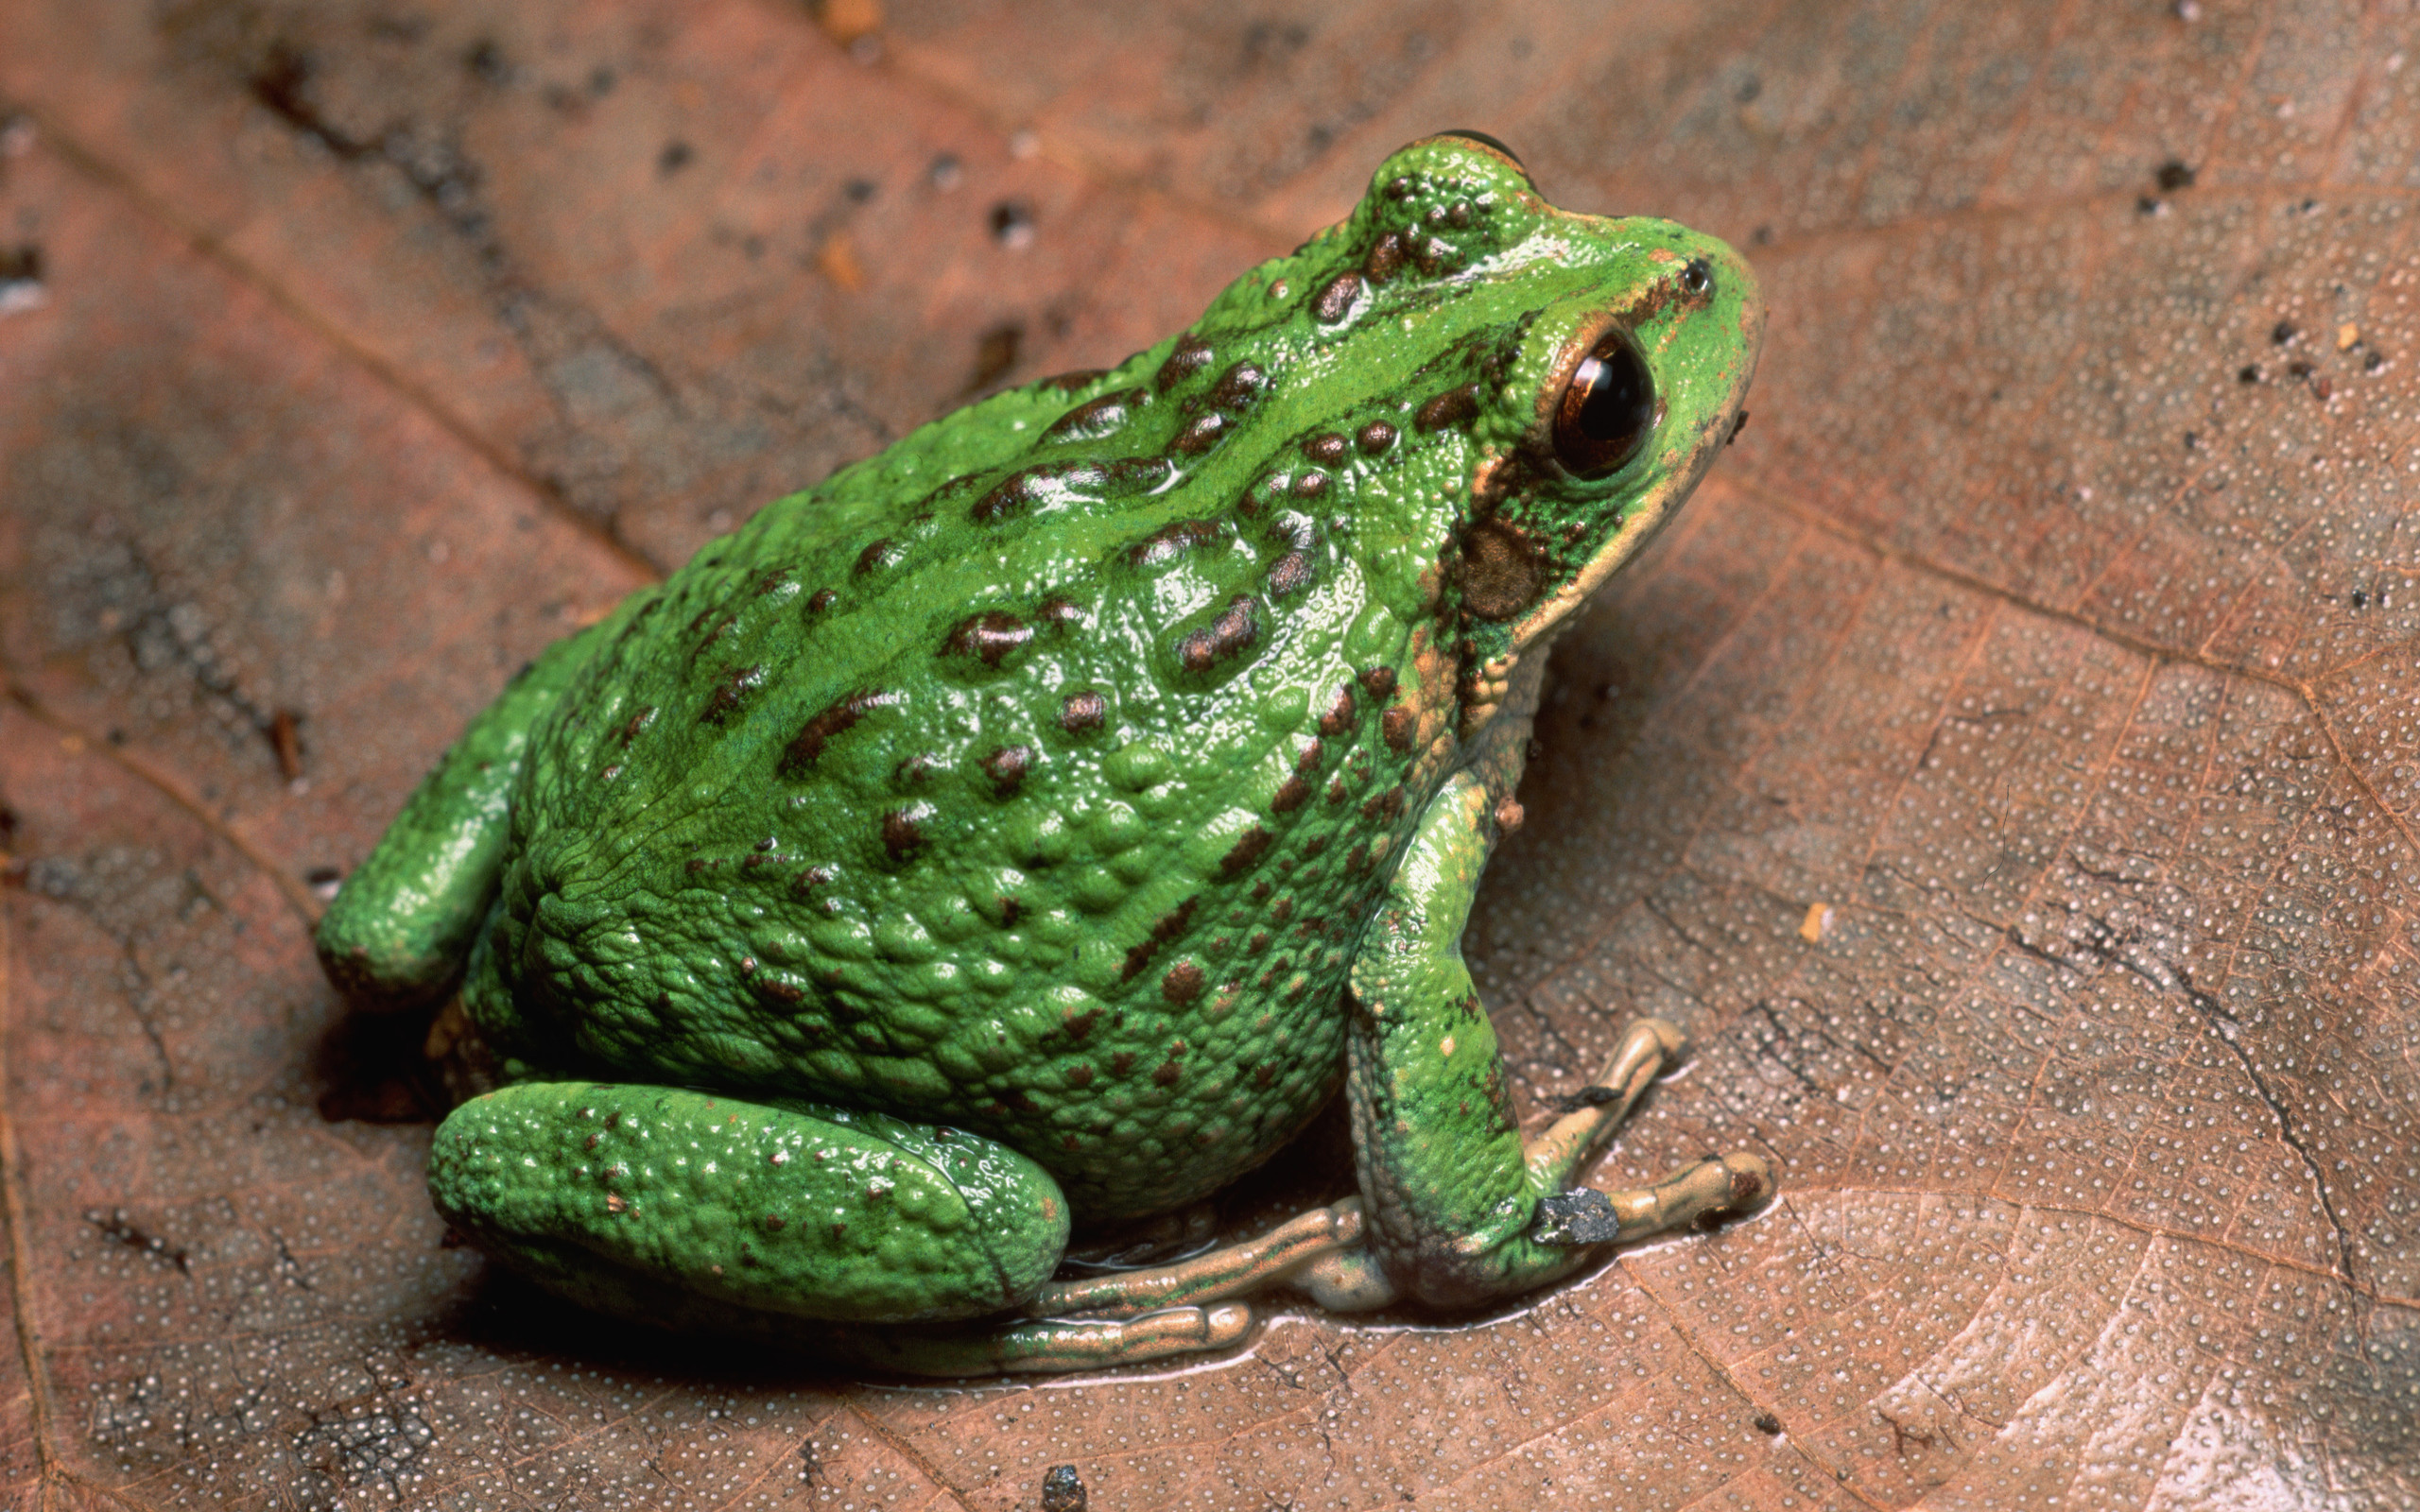 Andean Marsupial Tree Frog